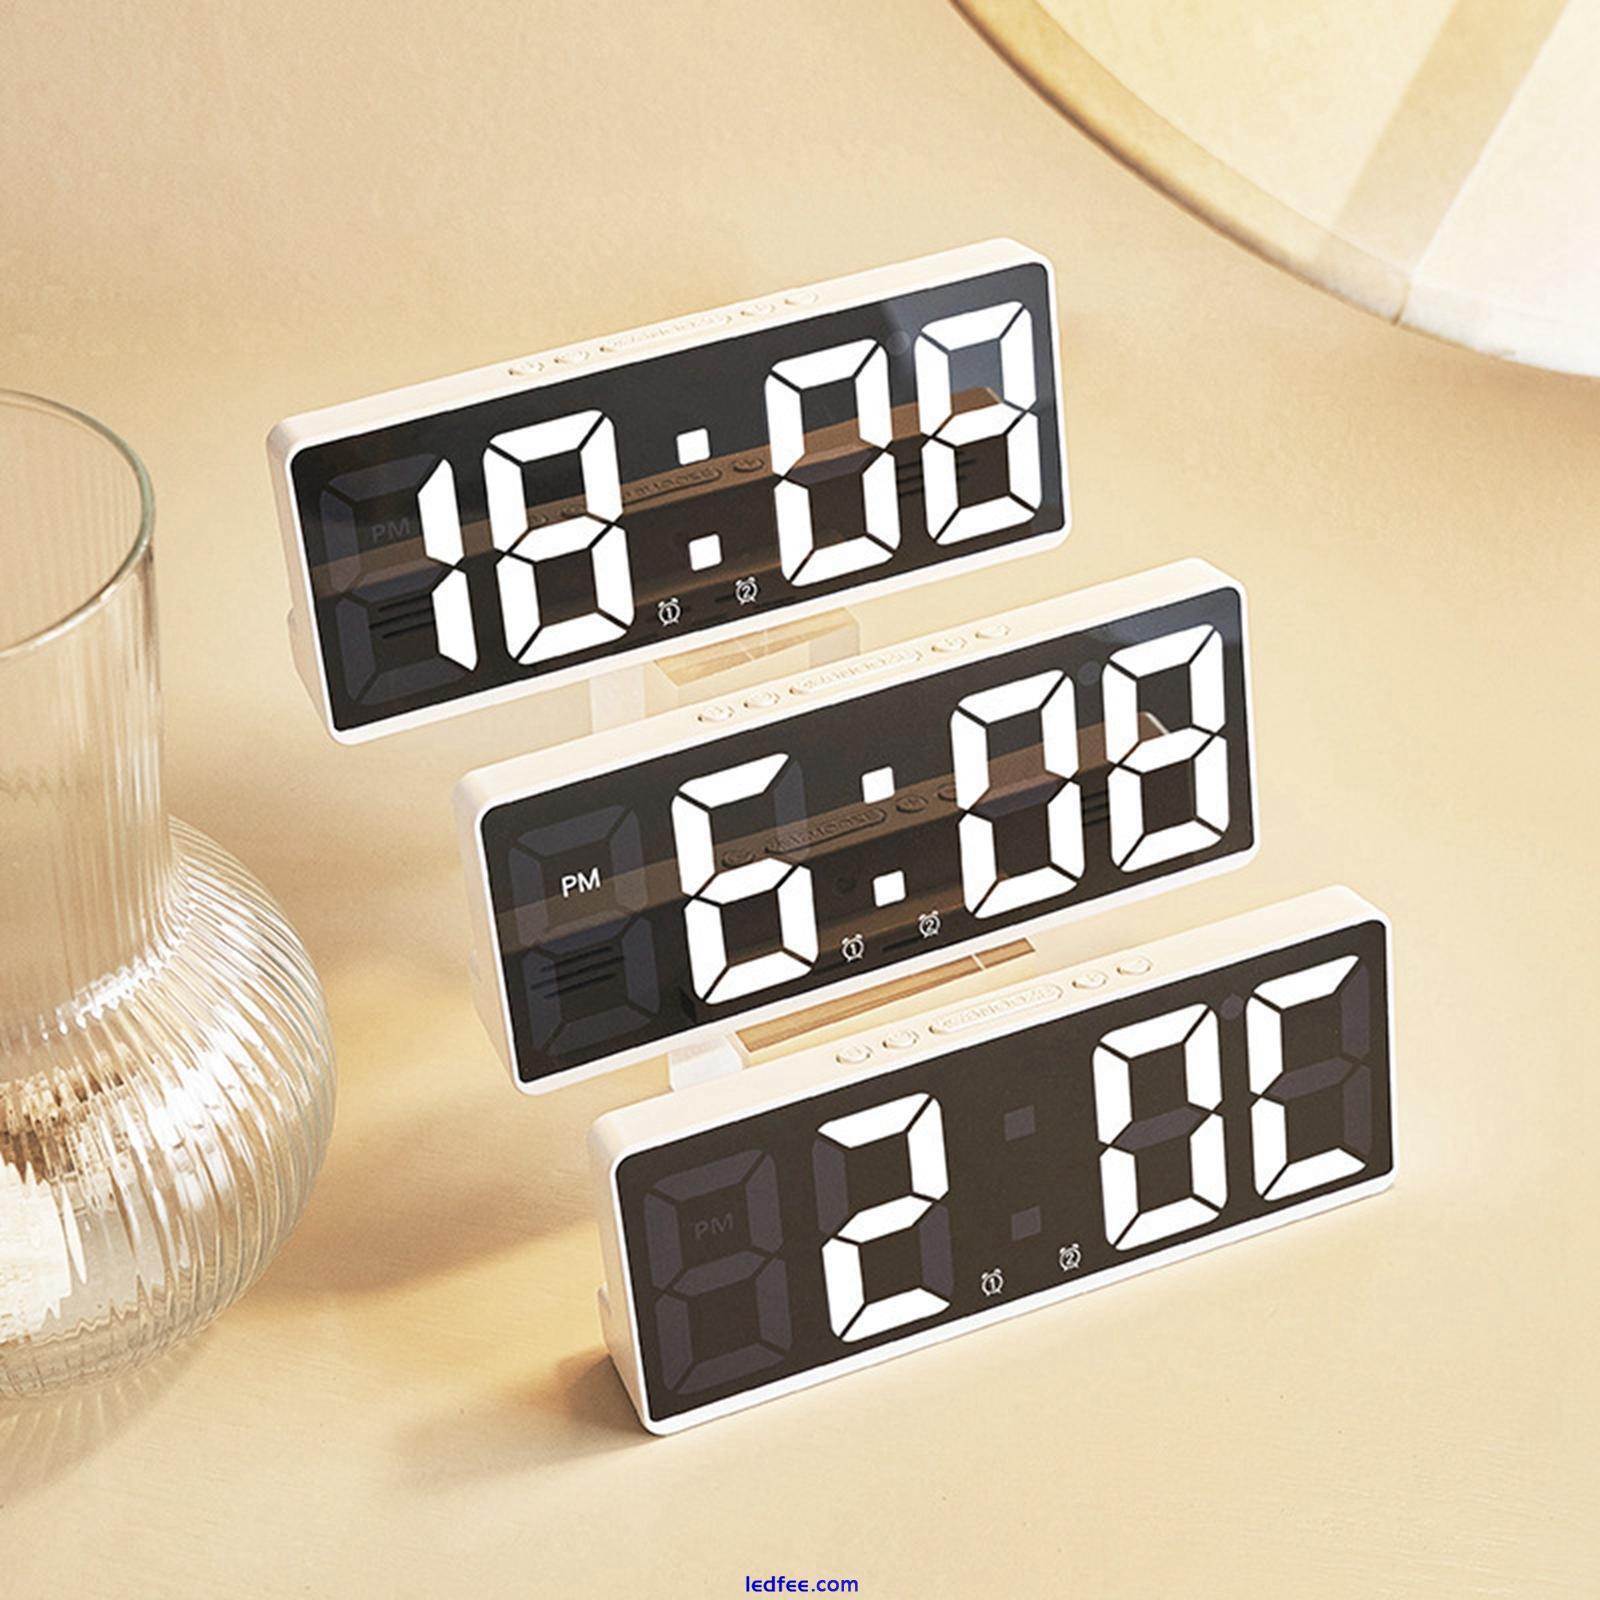 Large Number Alarm Clock Table Date LED Display for Elderly Home Living 1 